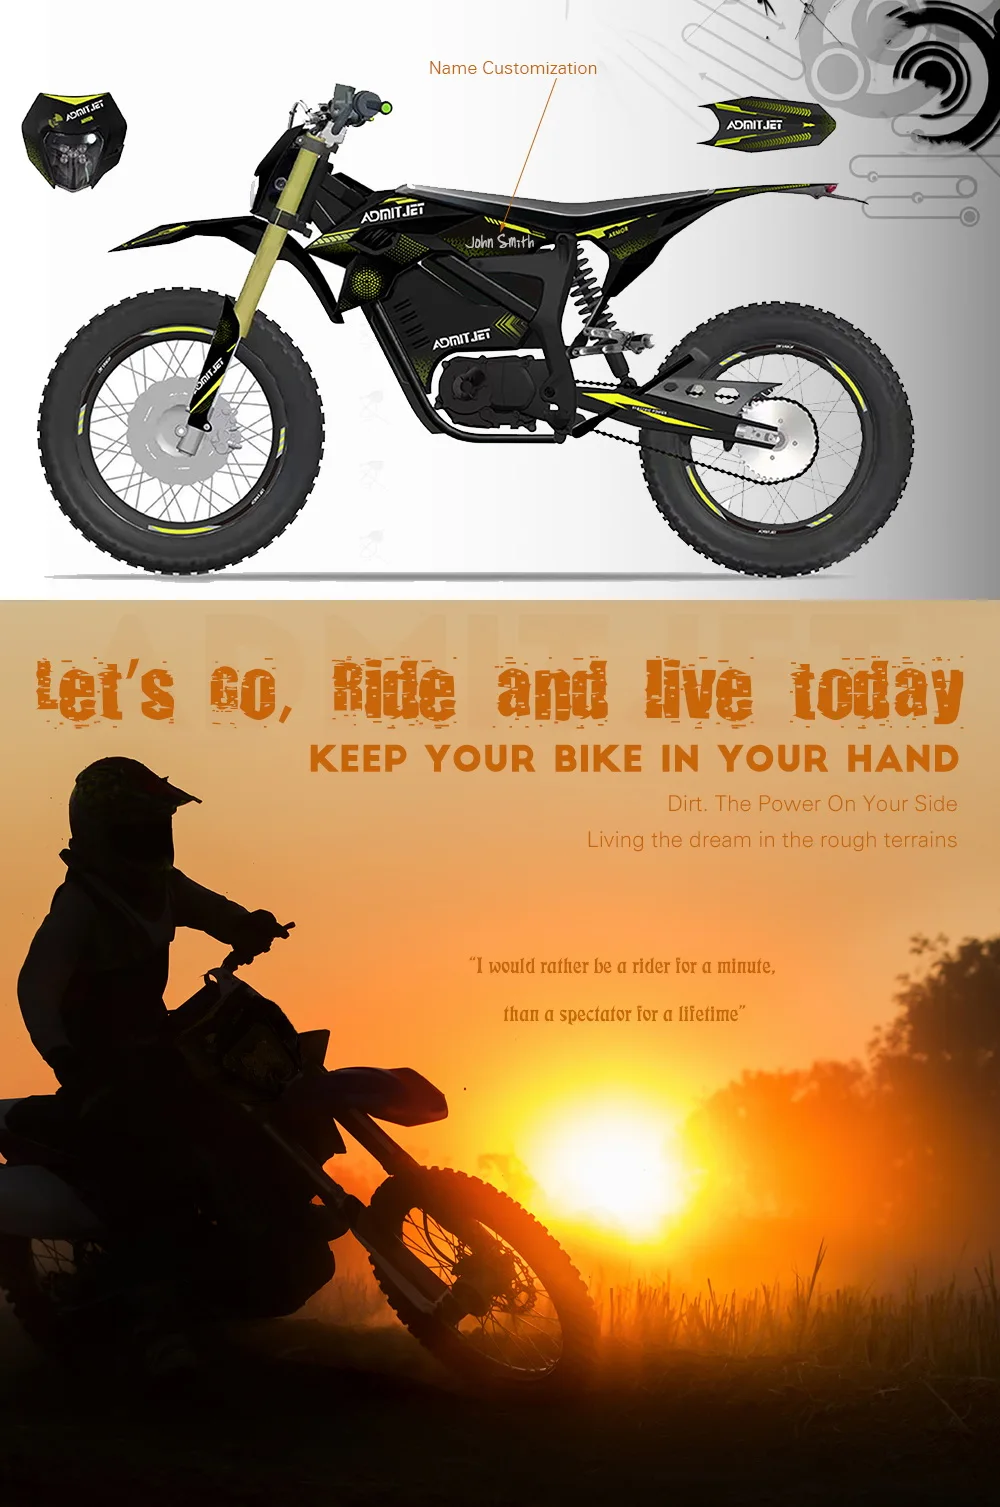 Supermoto Electric Motorcycle Fast Dual Sport E Super Moto Bikes